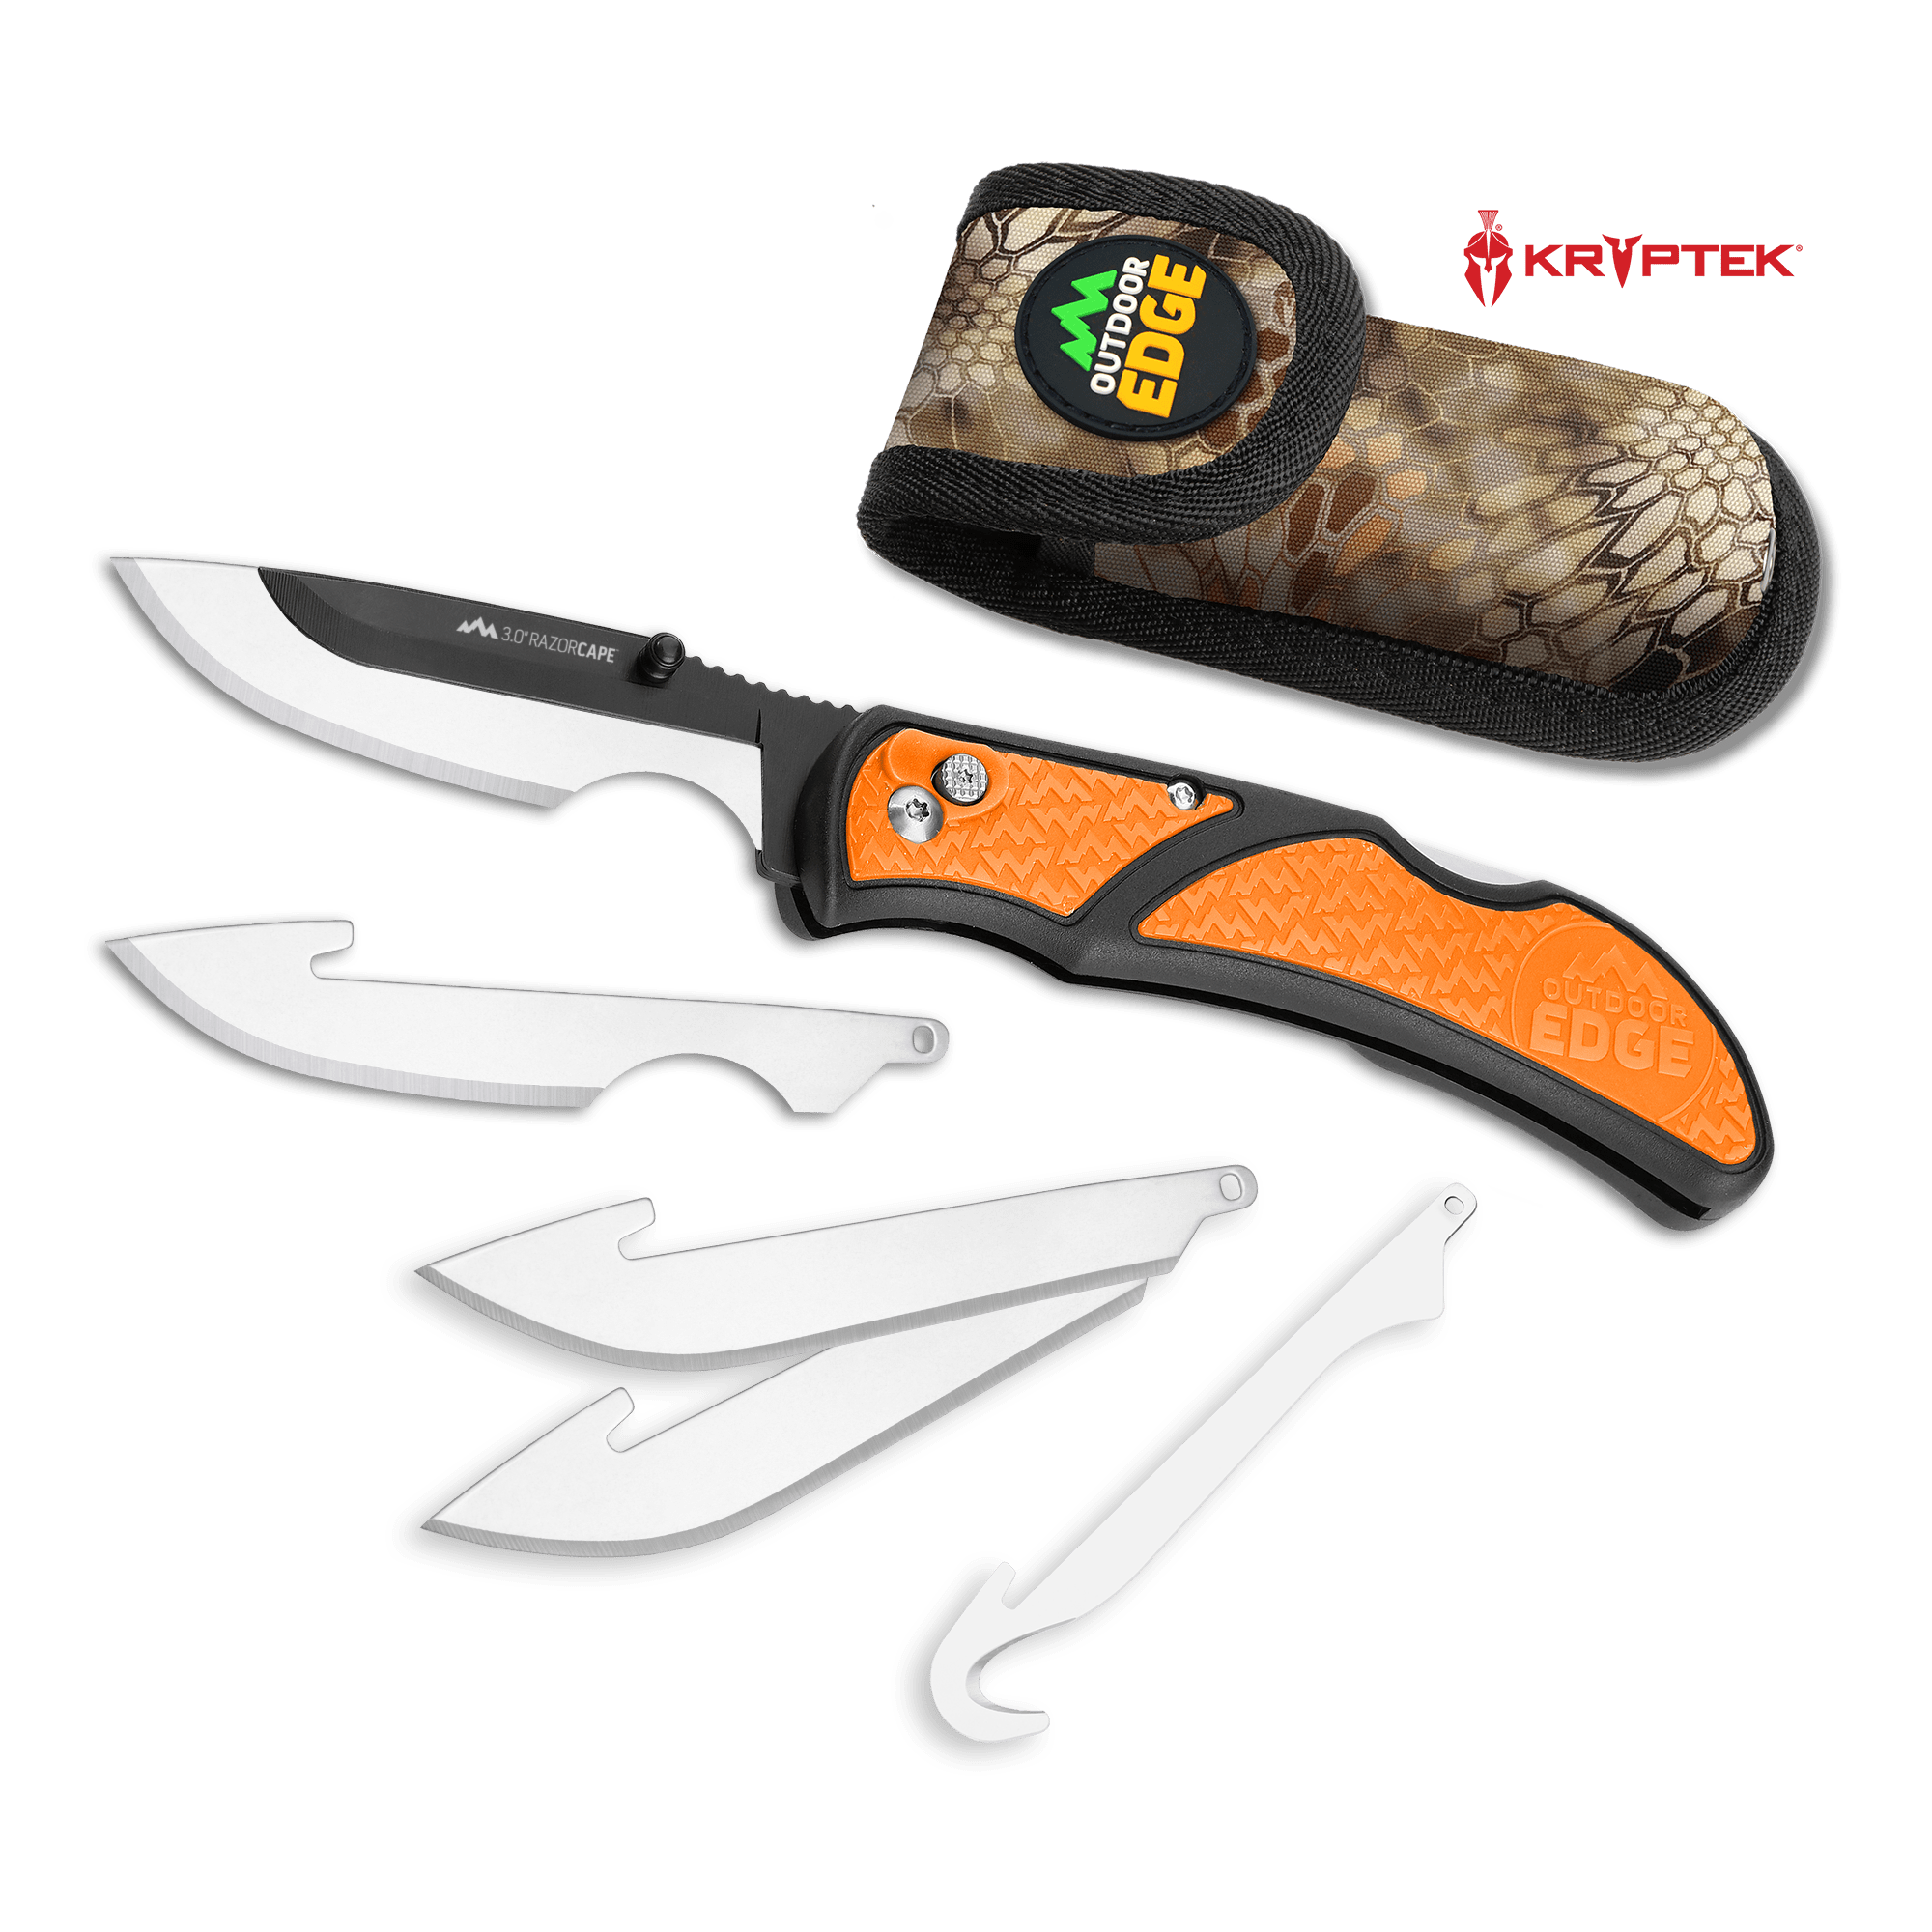 Outdoor Edge RazorCape Hunting Knife product photo